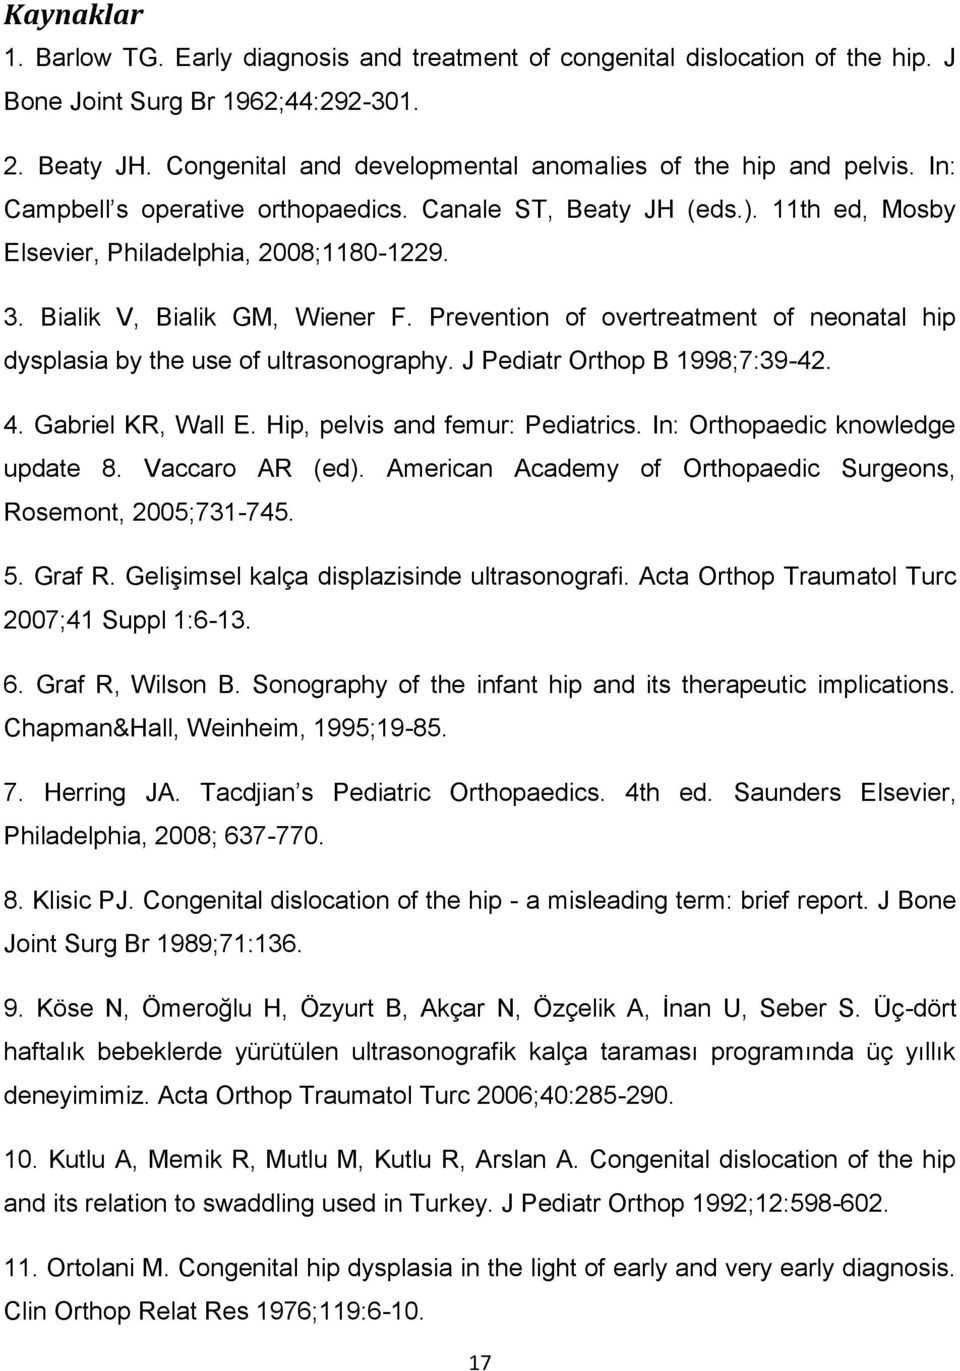 Bialik V, Bialik GM, Wiener F. Prevention of overtreatment of neonatal hip dysplasia by the use of ultrasonography. J Pediatr Orthop B 1998;7:39-42. 4. Gabriel KR, Wall E.